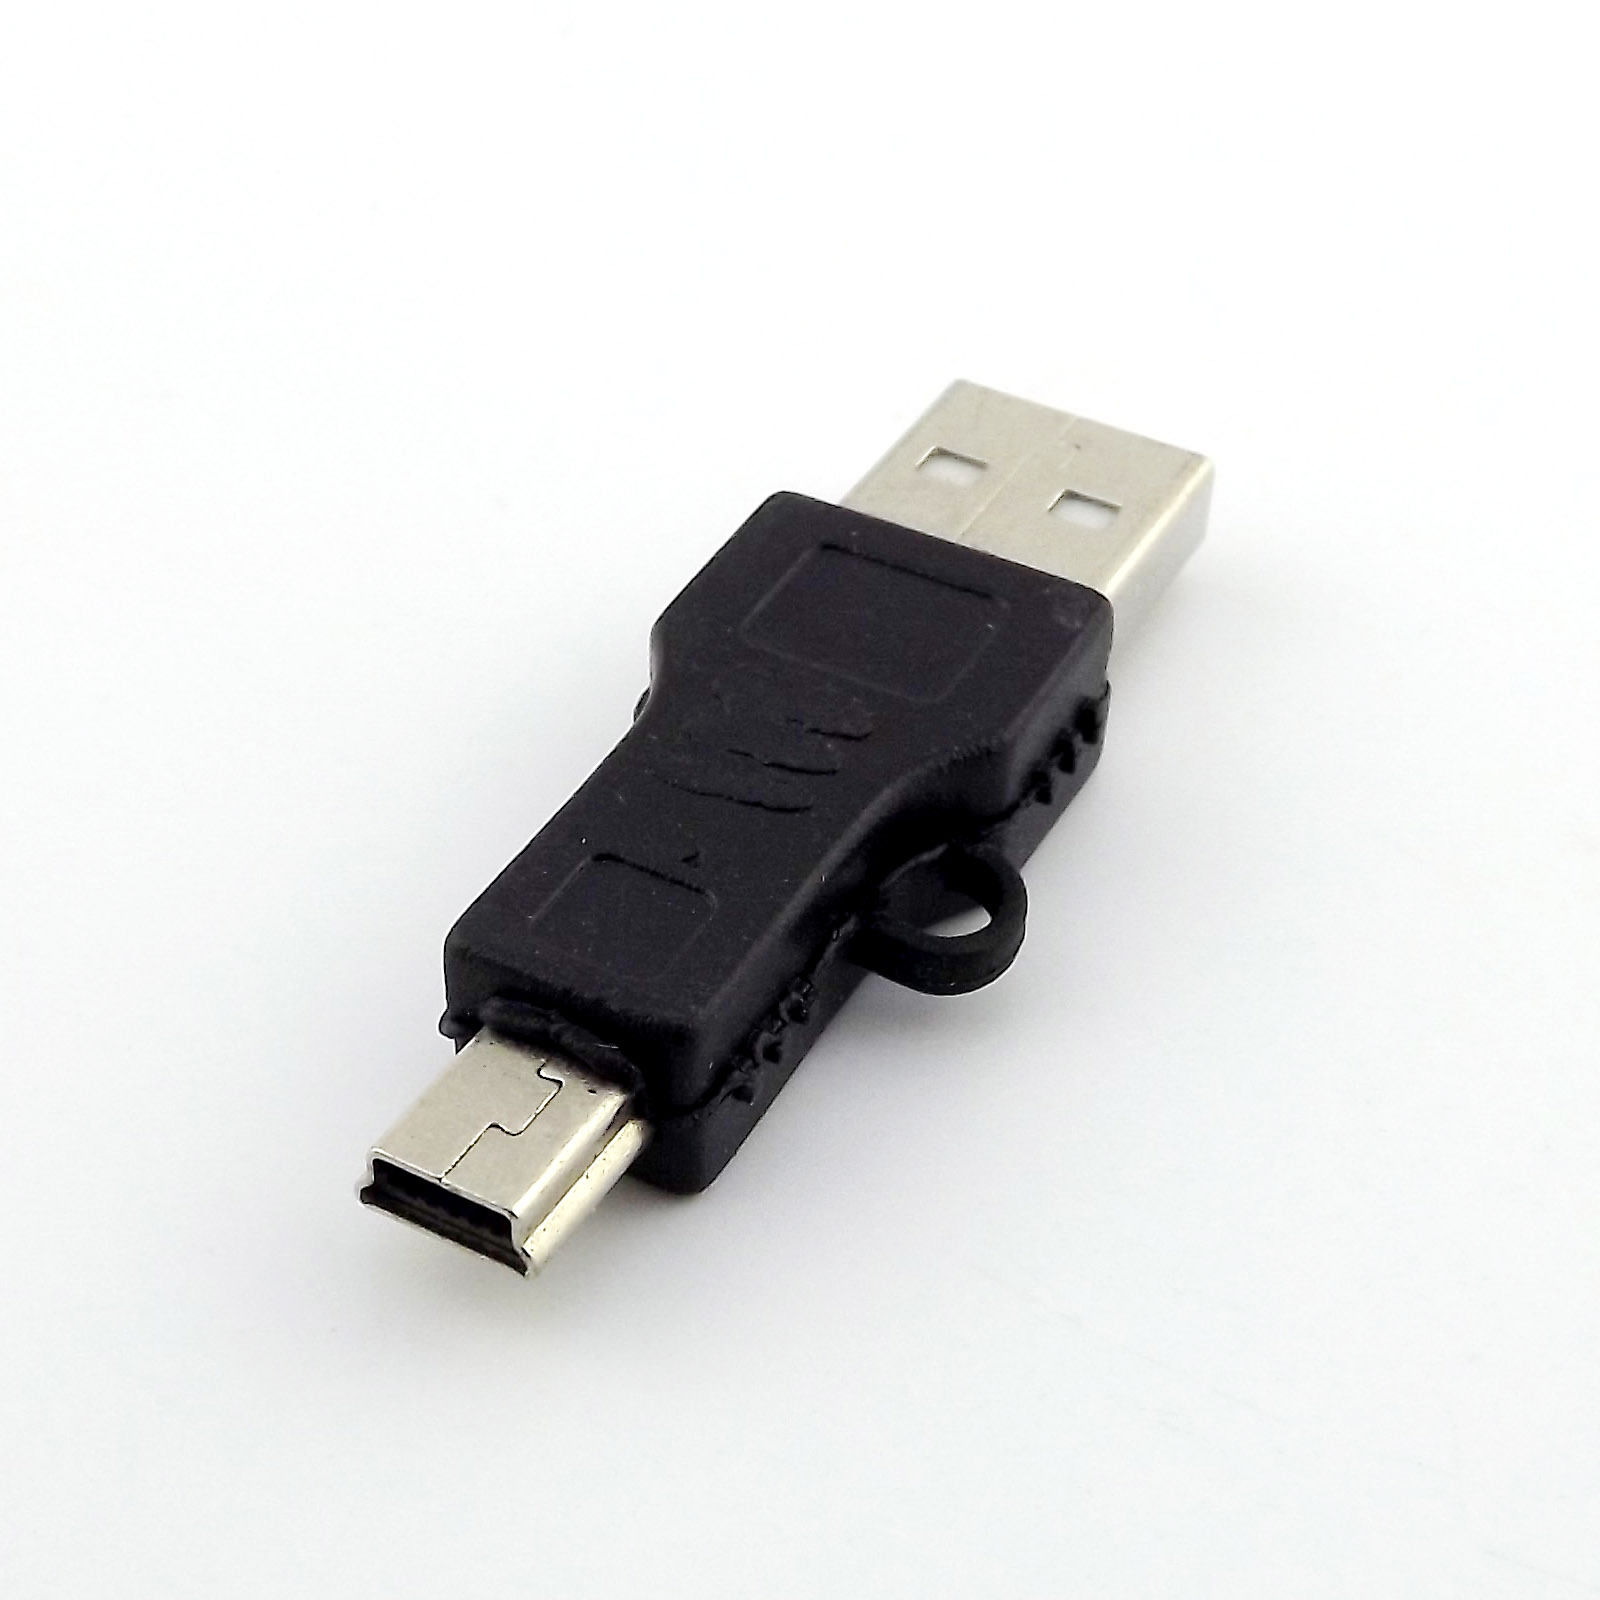 USB 2.0 A MALE PLUG TO MINI USB B 5 PIN MALE PLUG ADAPTER CONVERTER CONNECTOR